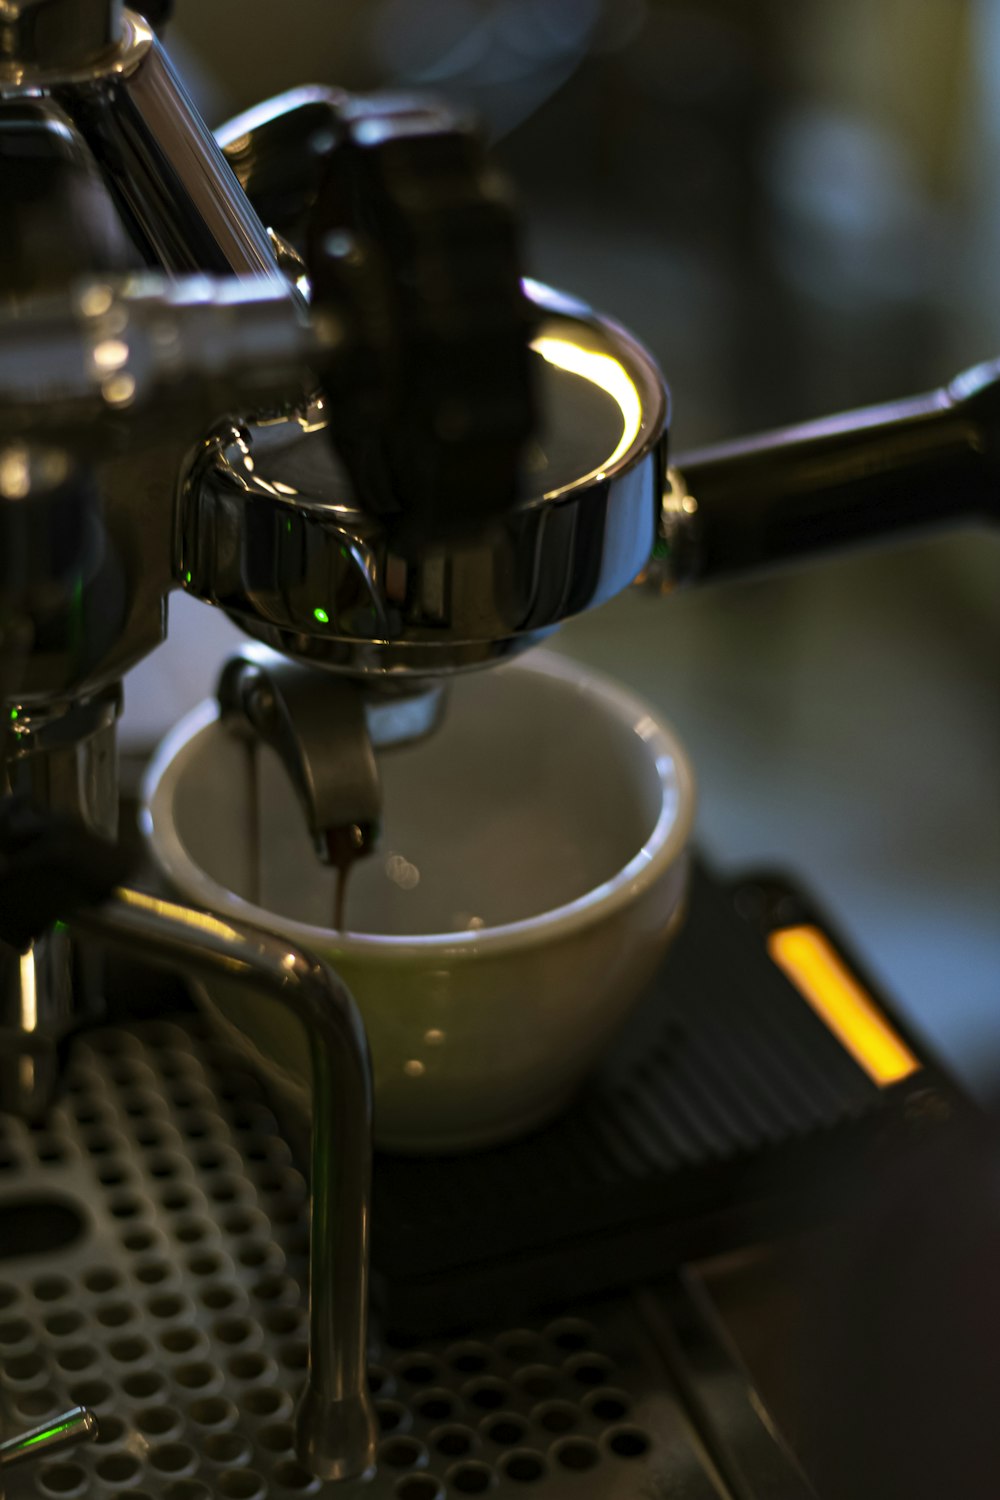 white ceramic teacup on black and silver espresso machine